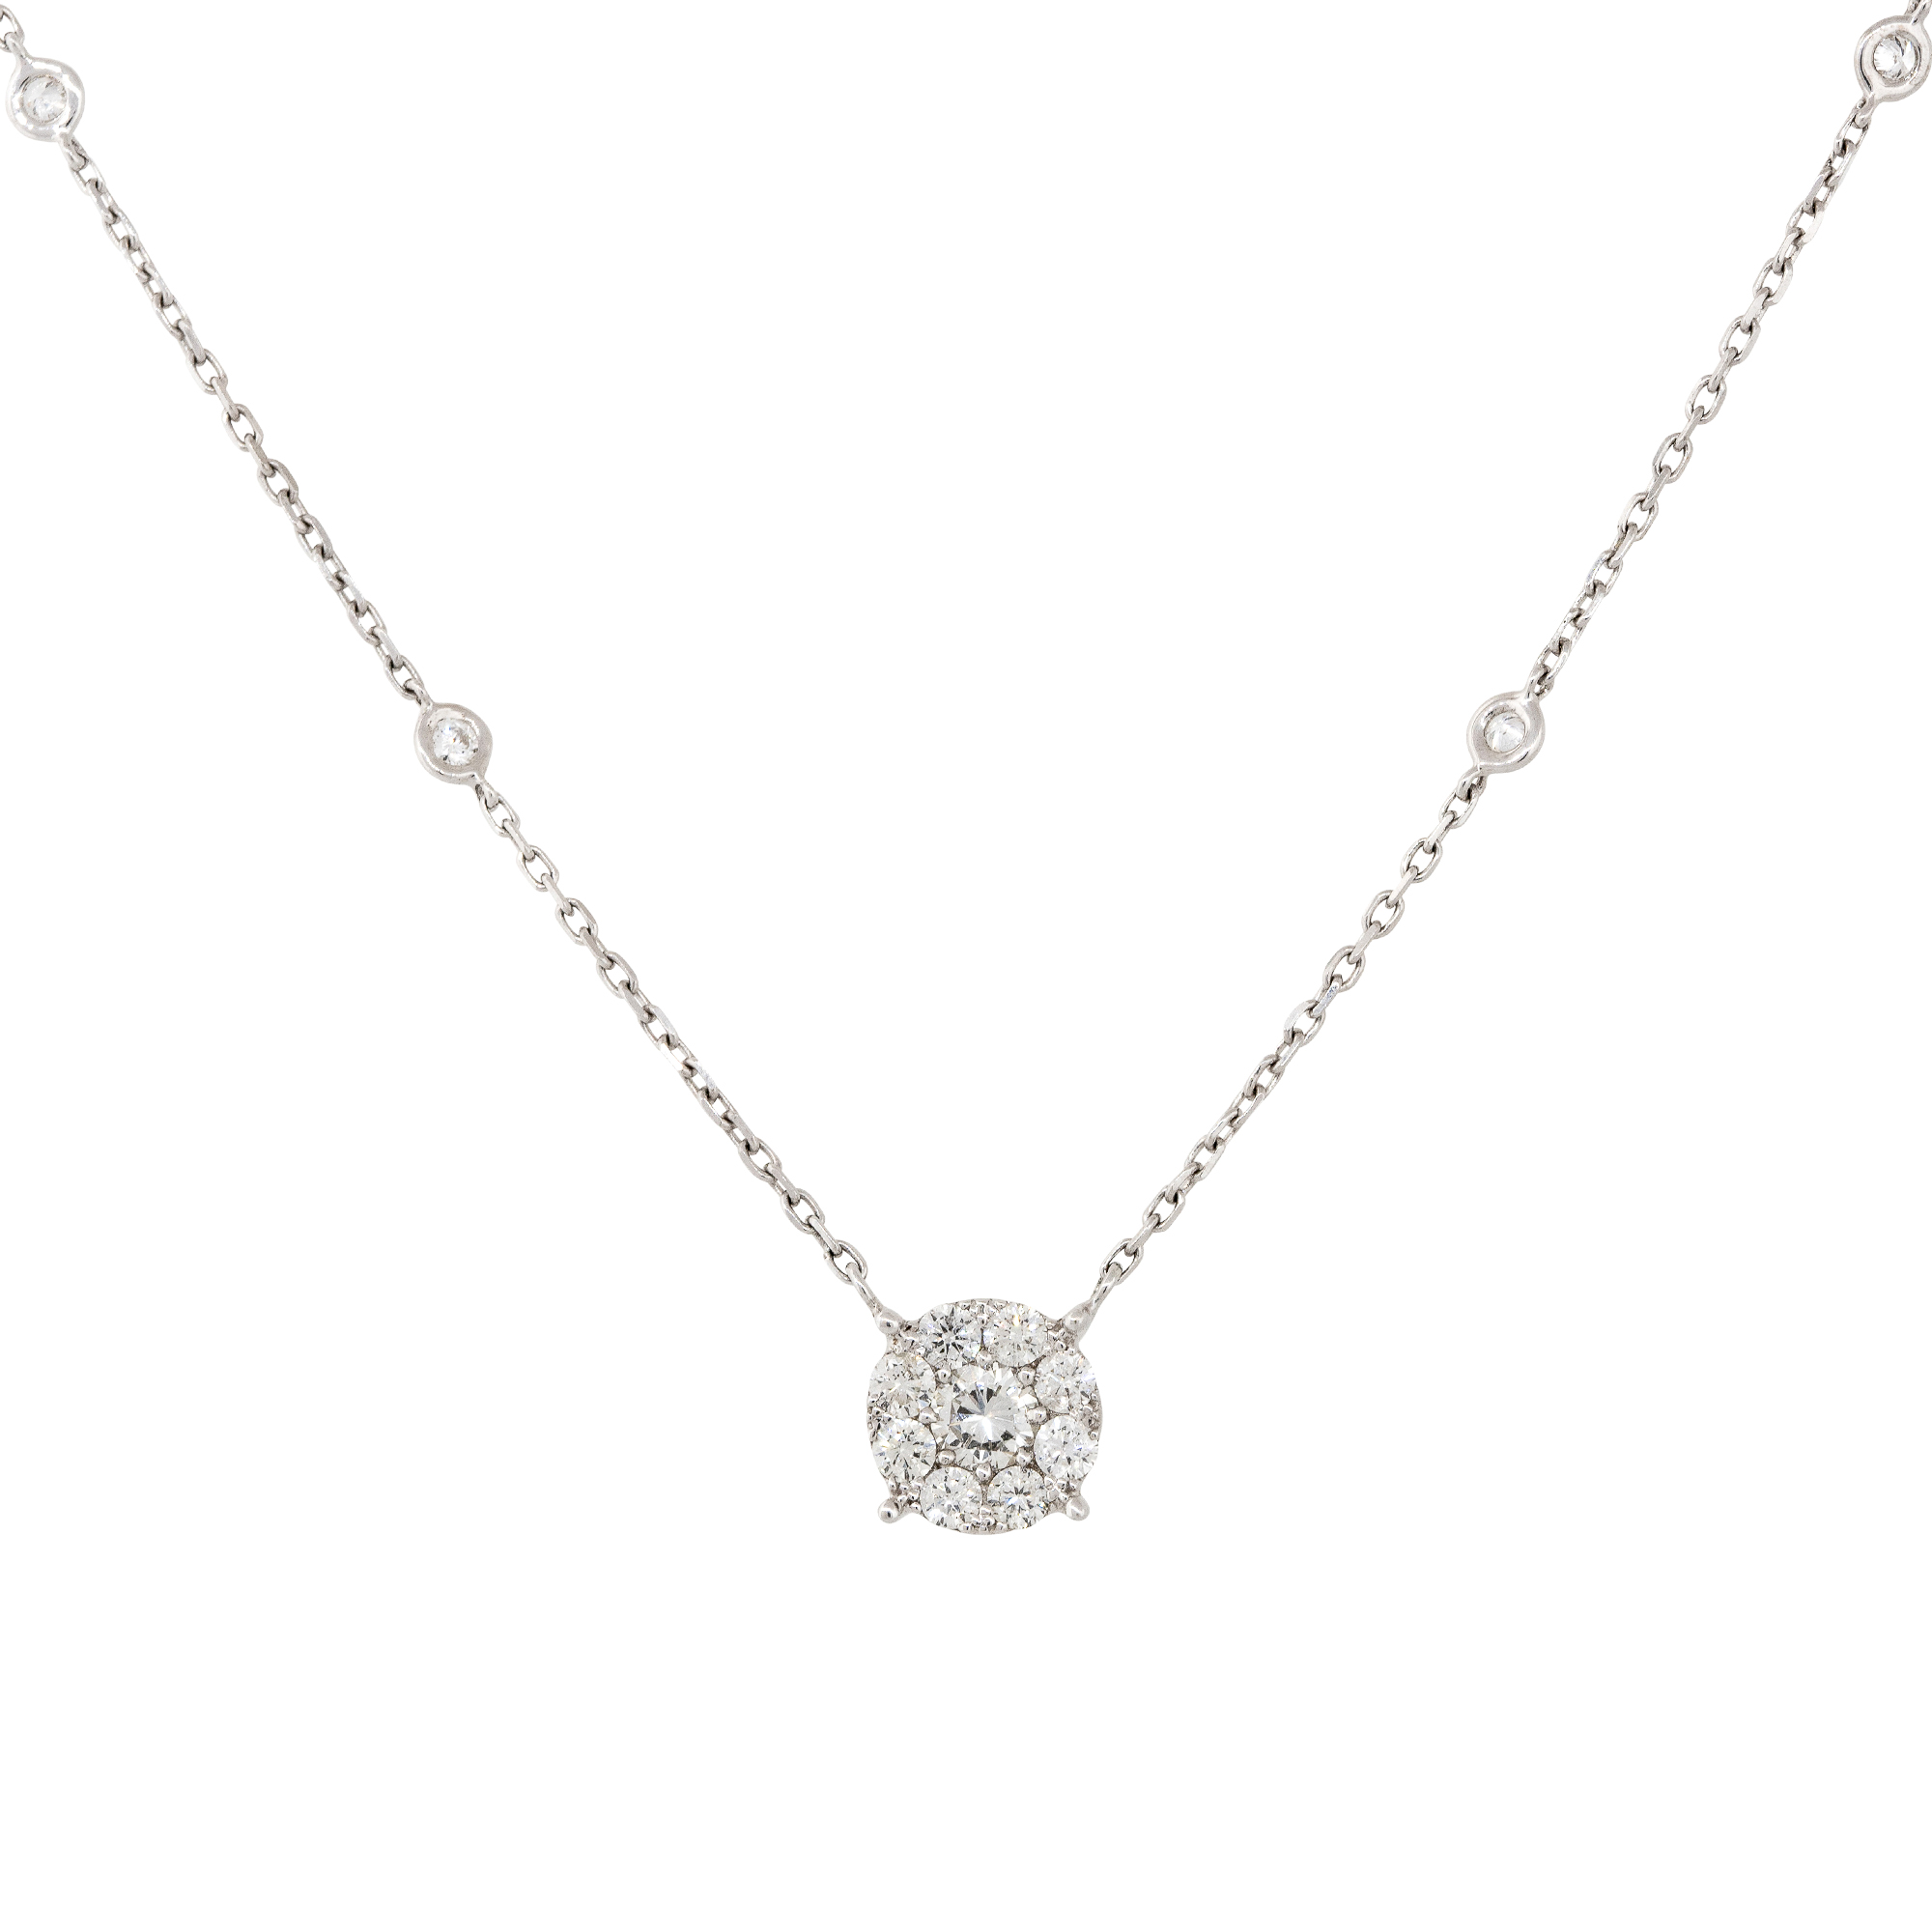 cerf-volant diamond station necklace | AHKAH official site